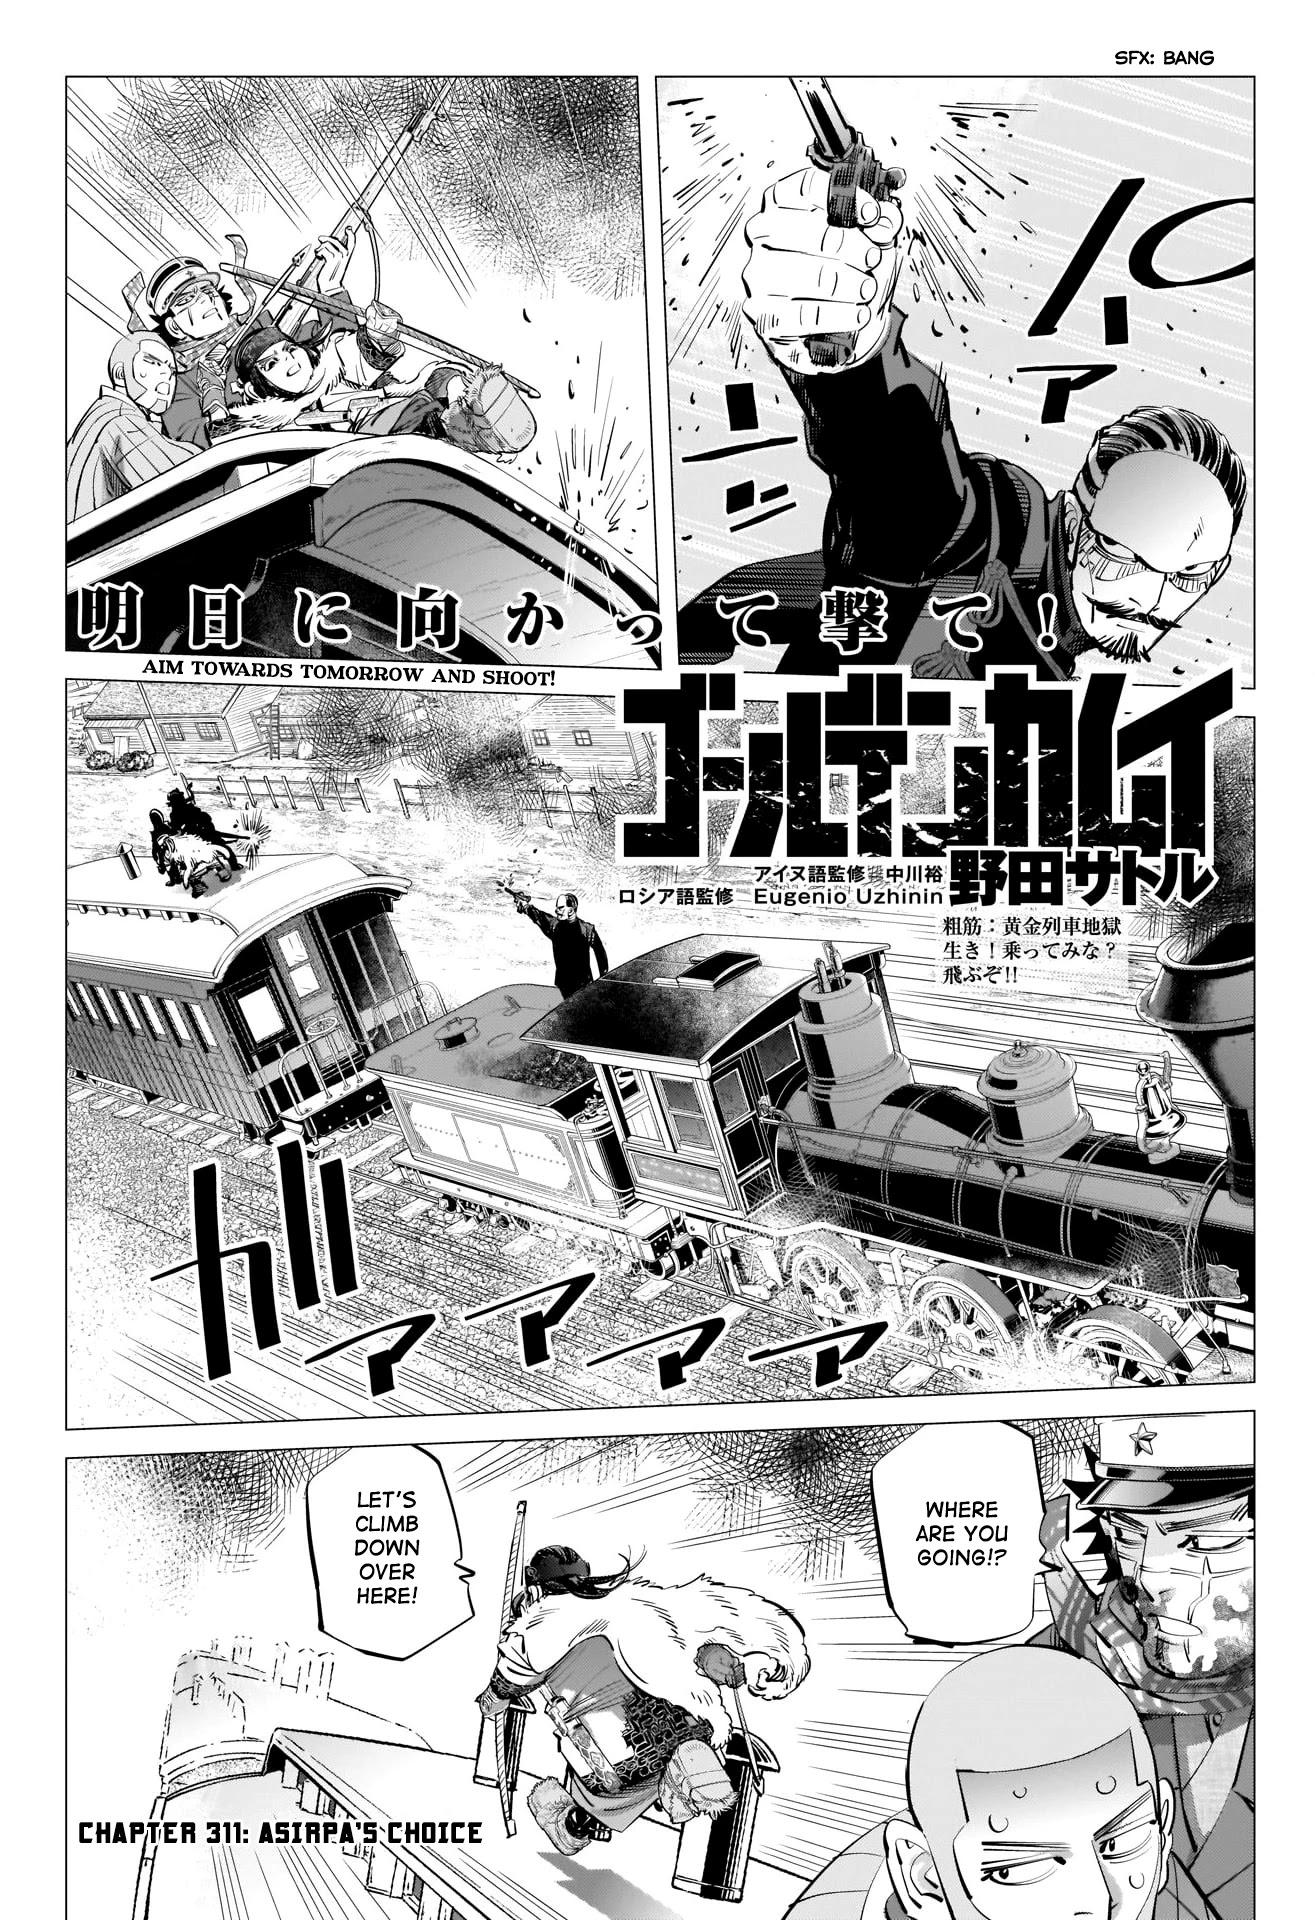 Golden Kamui Vol 10 Ch 311 Page 1 Mangago